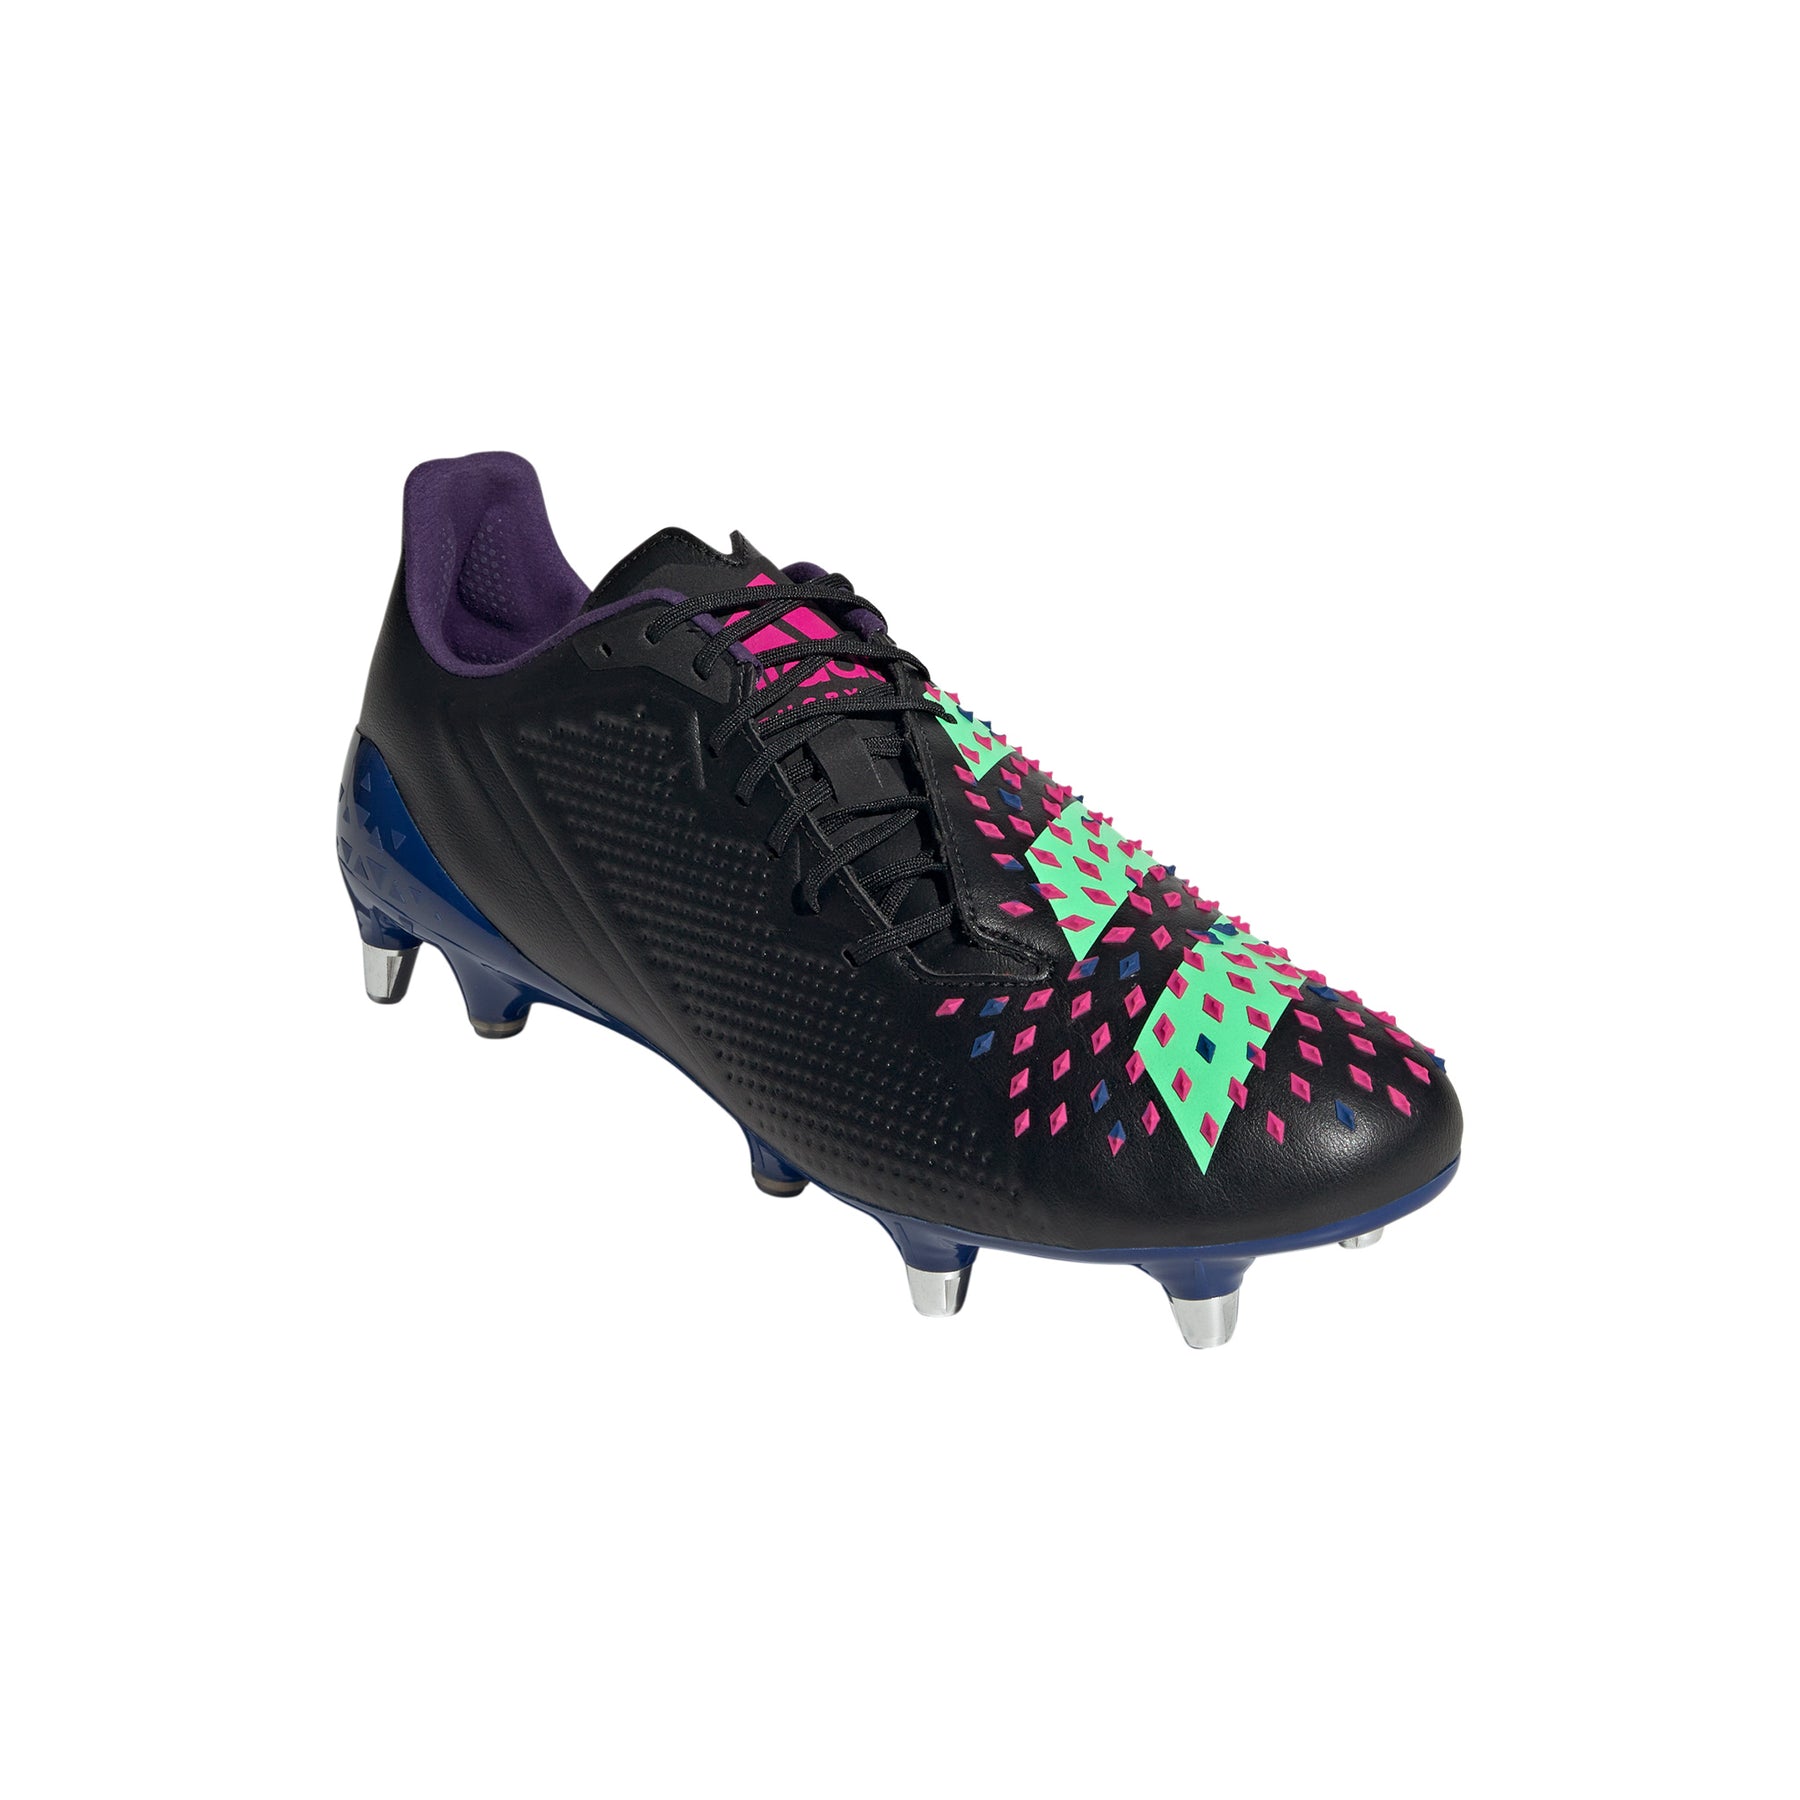 Adidas Rugby Predator Malice SG Rugby Boots 2022: Black